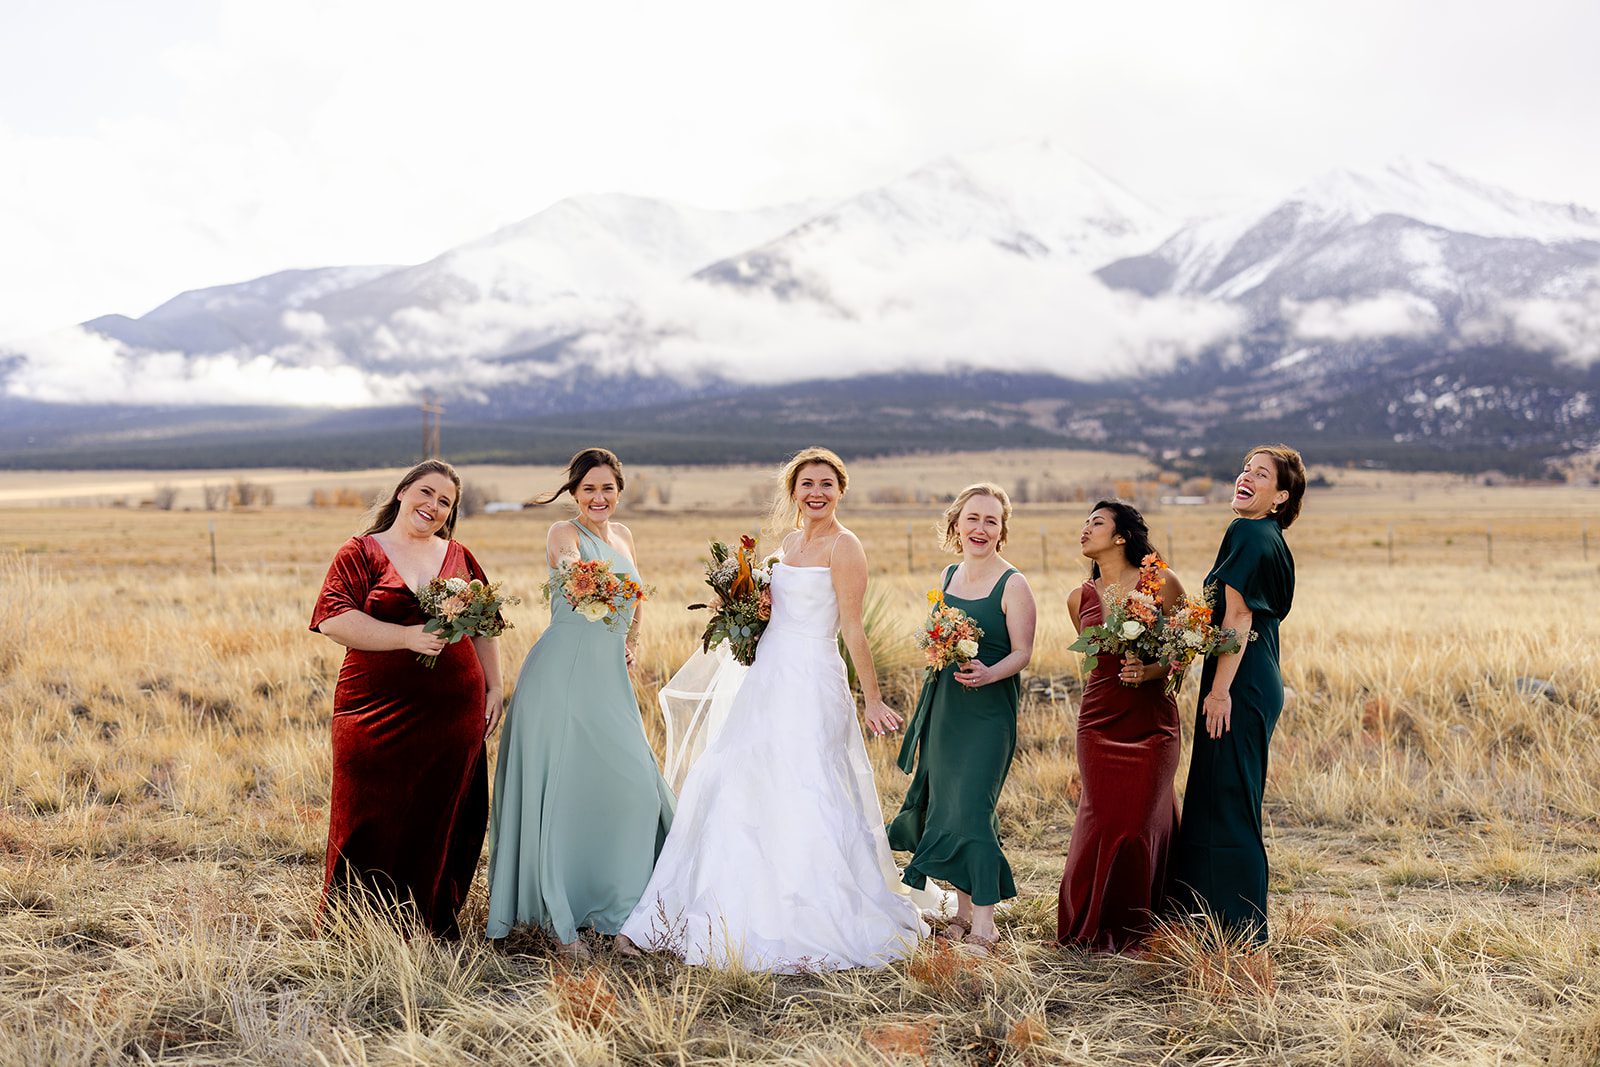 Bridesmaids photos, Mismatch bridesmaids dresses, Velvet bridesmaids dresses, Boho bridesmaids dresses, Boho wedding flowers, The Barn at Sunset Ranch